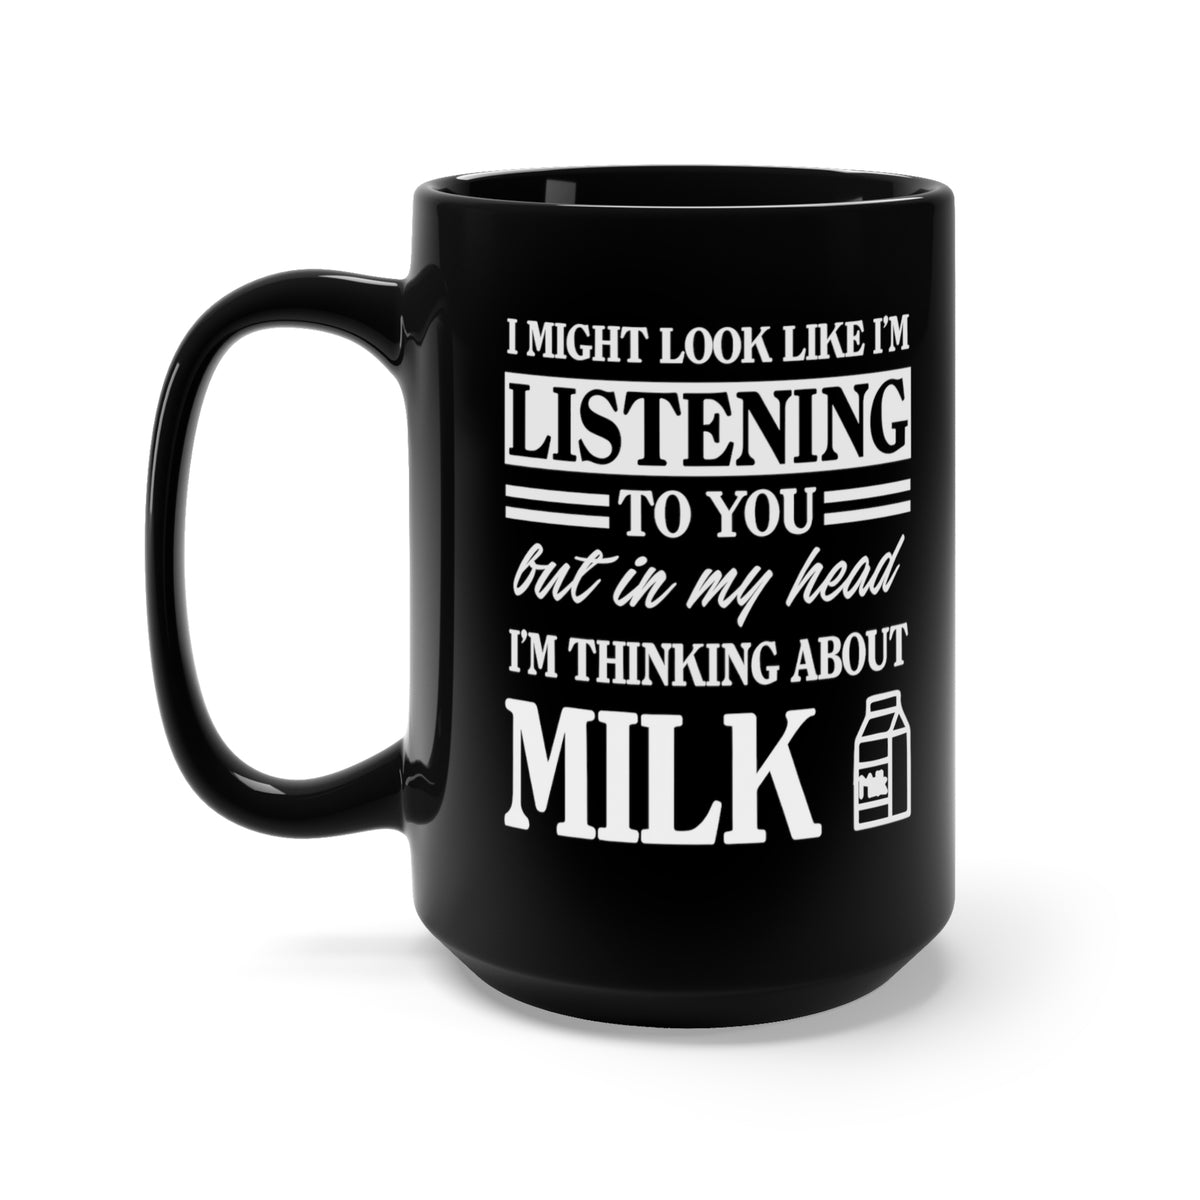 Funny Black Mug For Milk Lovers - Birthday Present - Christmas Gift - Ceramic 15oz